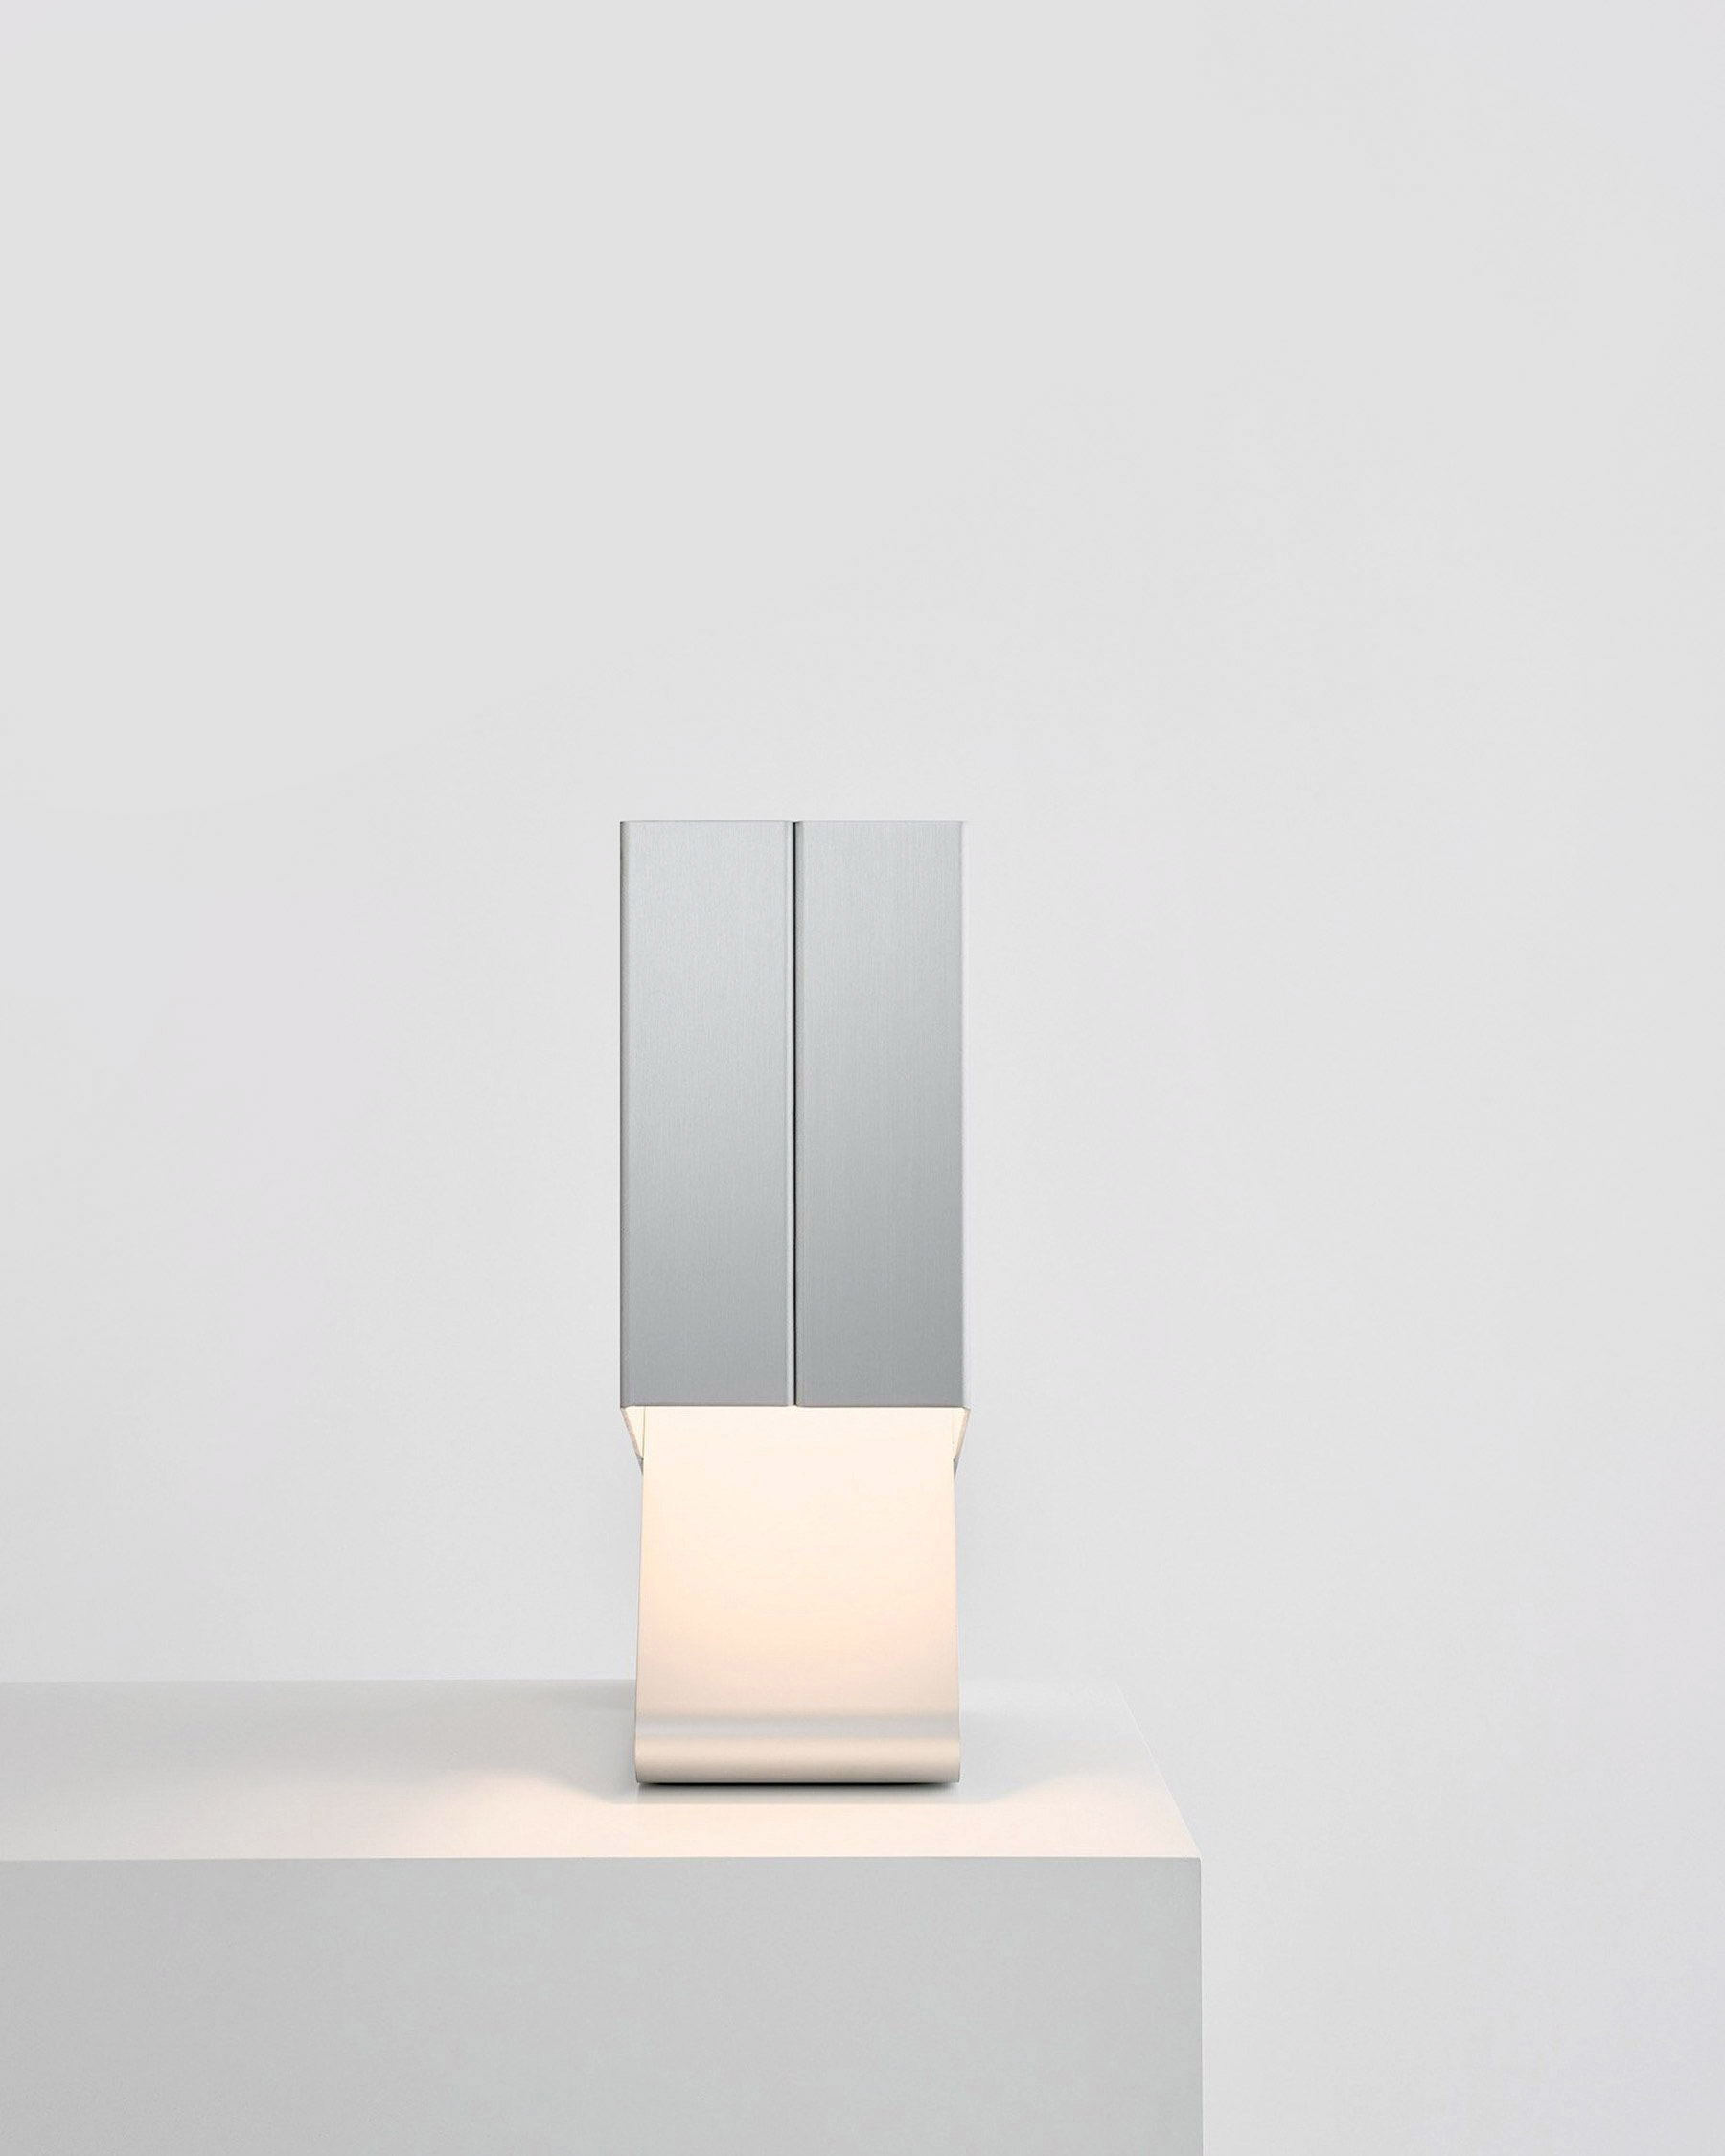 Minimalist Table Lamp GT02 by design studio Garcia Tamjidi